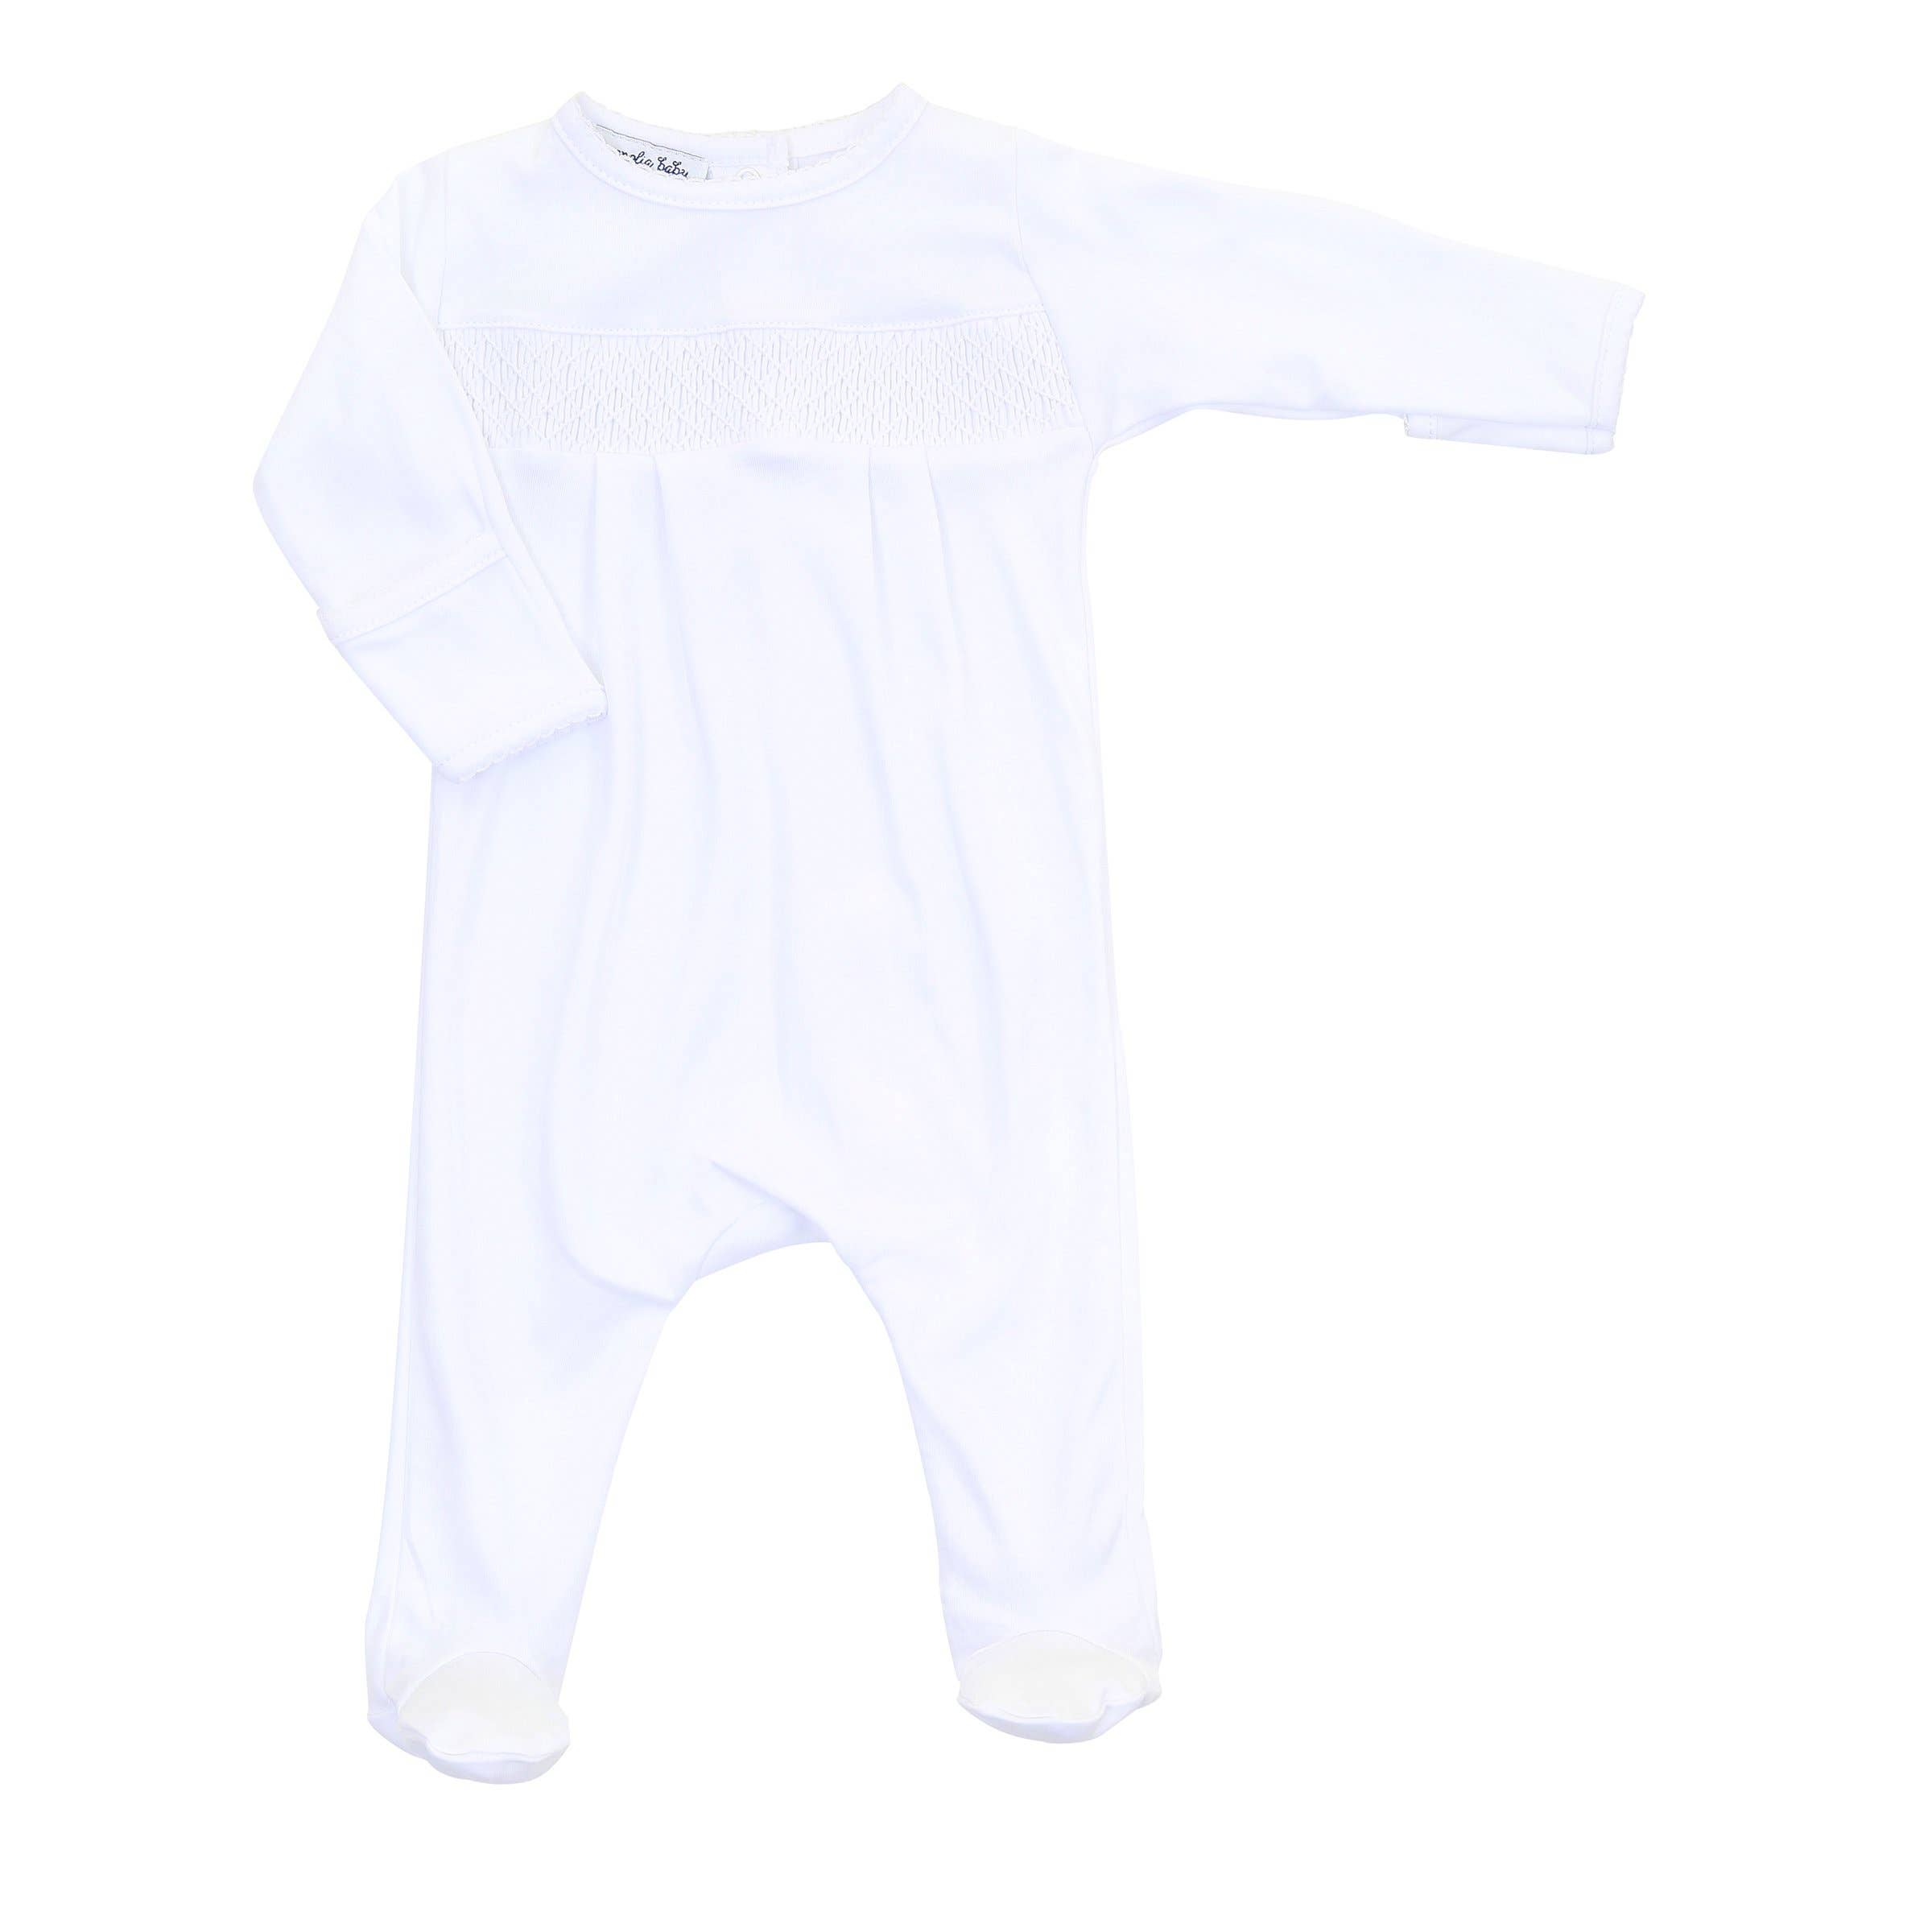 Magnolia Baby Unisex Baby Worth The Wait Essentials Printed Swaddle Blanket White